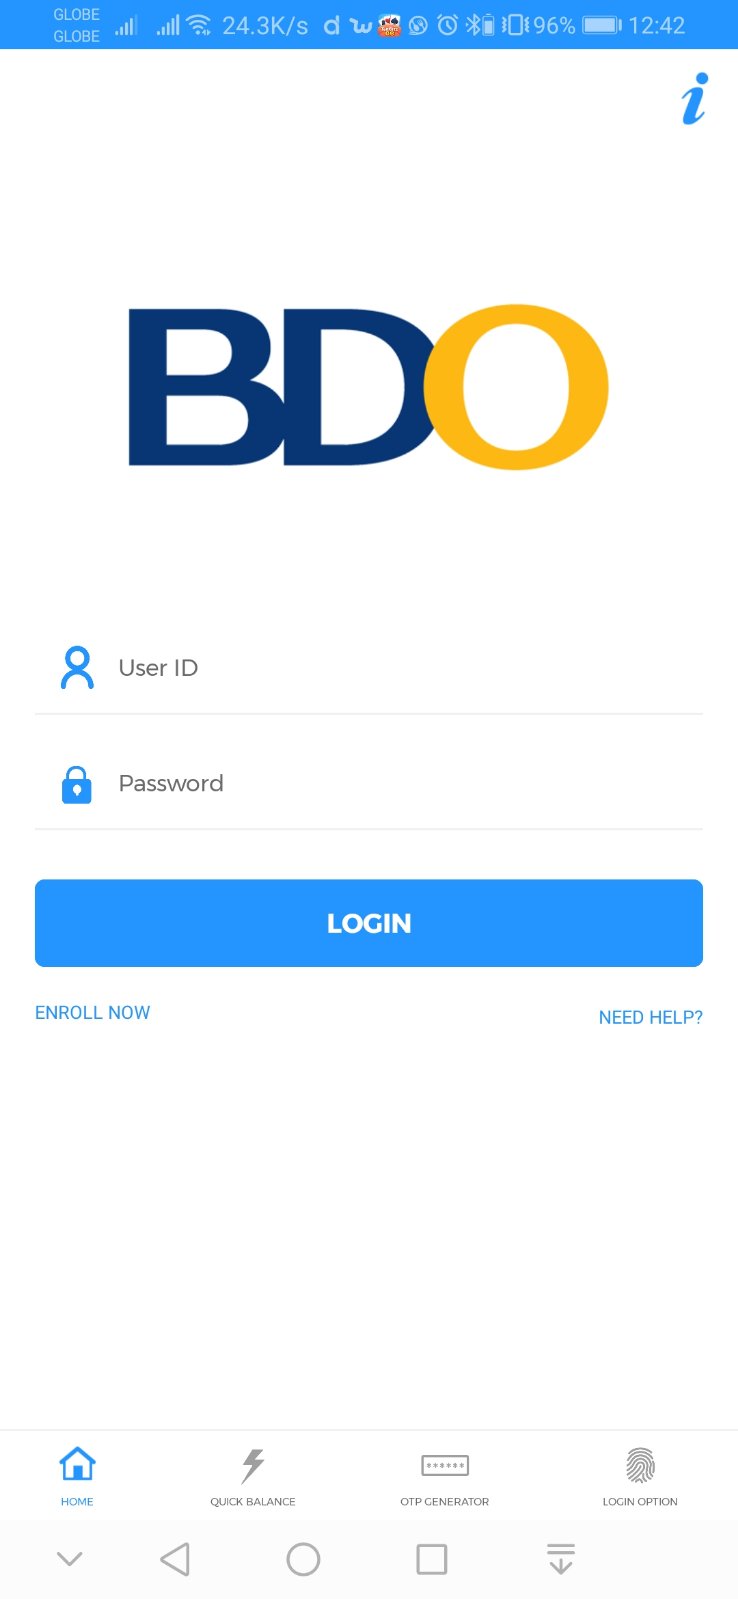 BDO Mobile Login Homepage